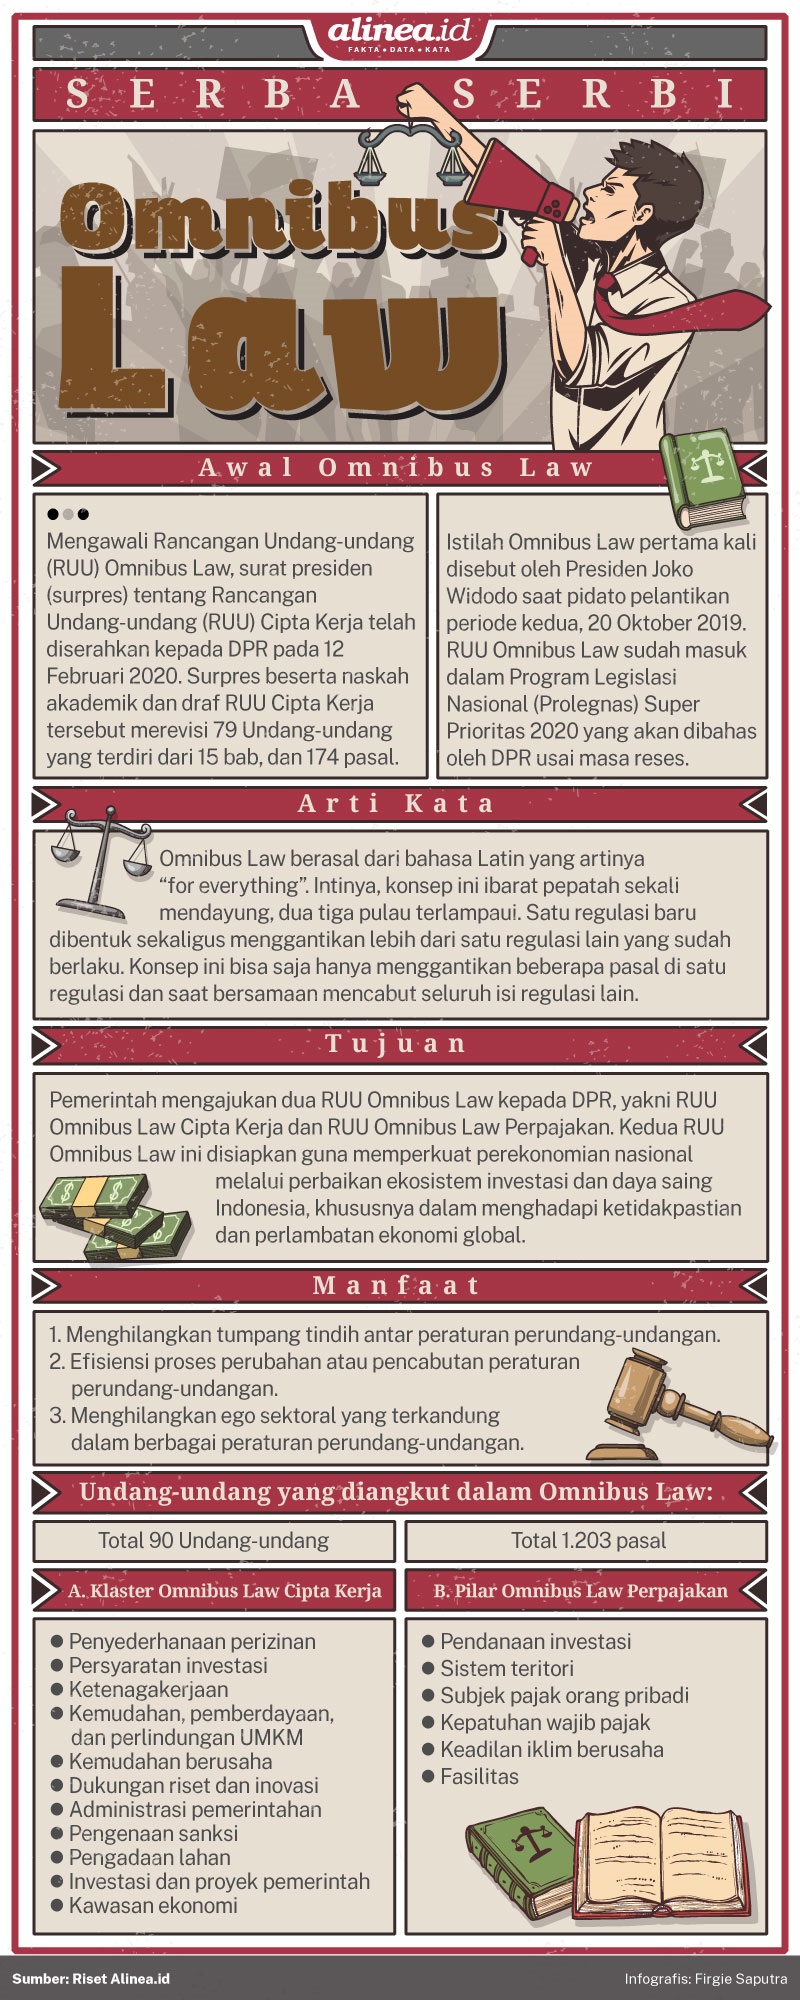 Infografik serba-serbi Omnibus Law. Alinea.id/Firgie Saputra